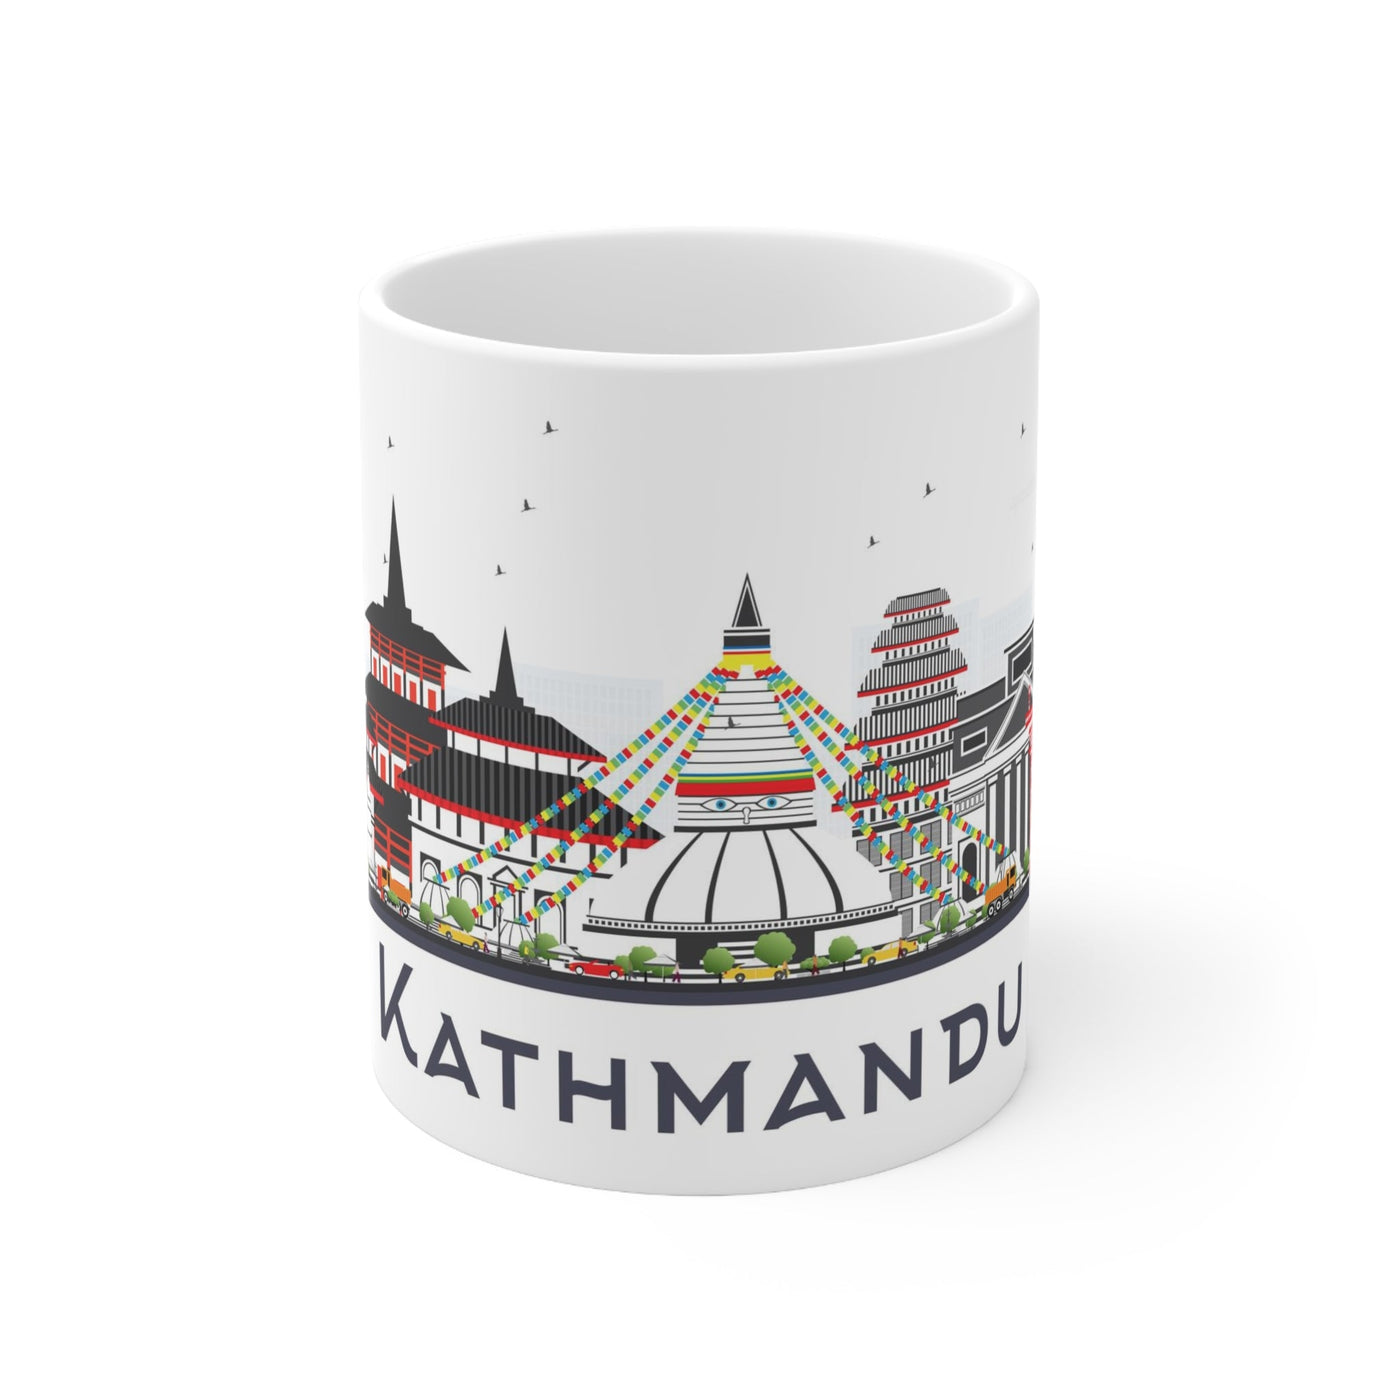 Kathmandu Nepal Coffee Mug - Ezra's Clothing